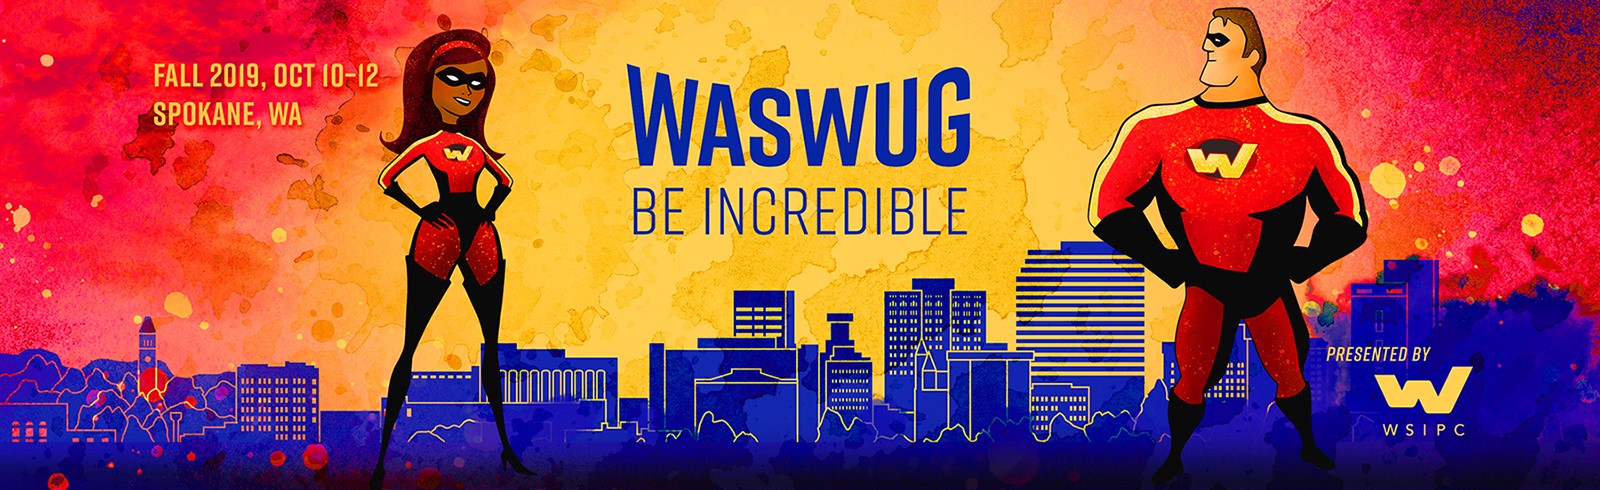 WASWUG Email Header - be Incredible